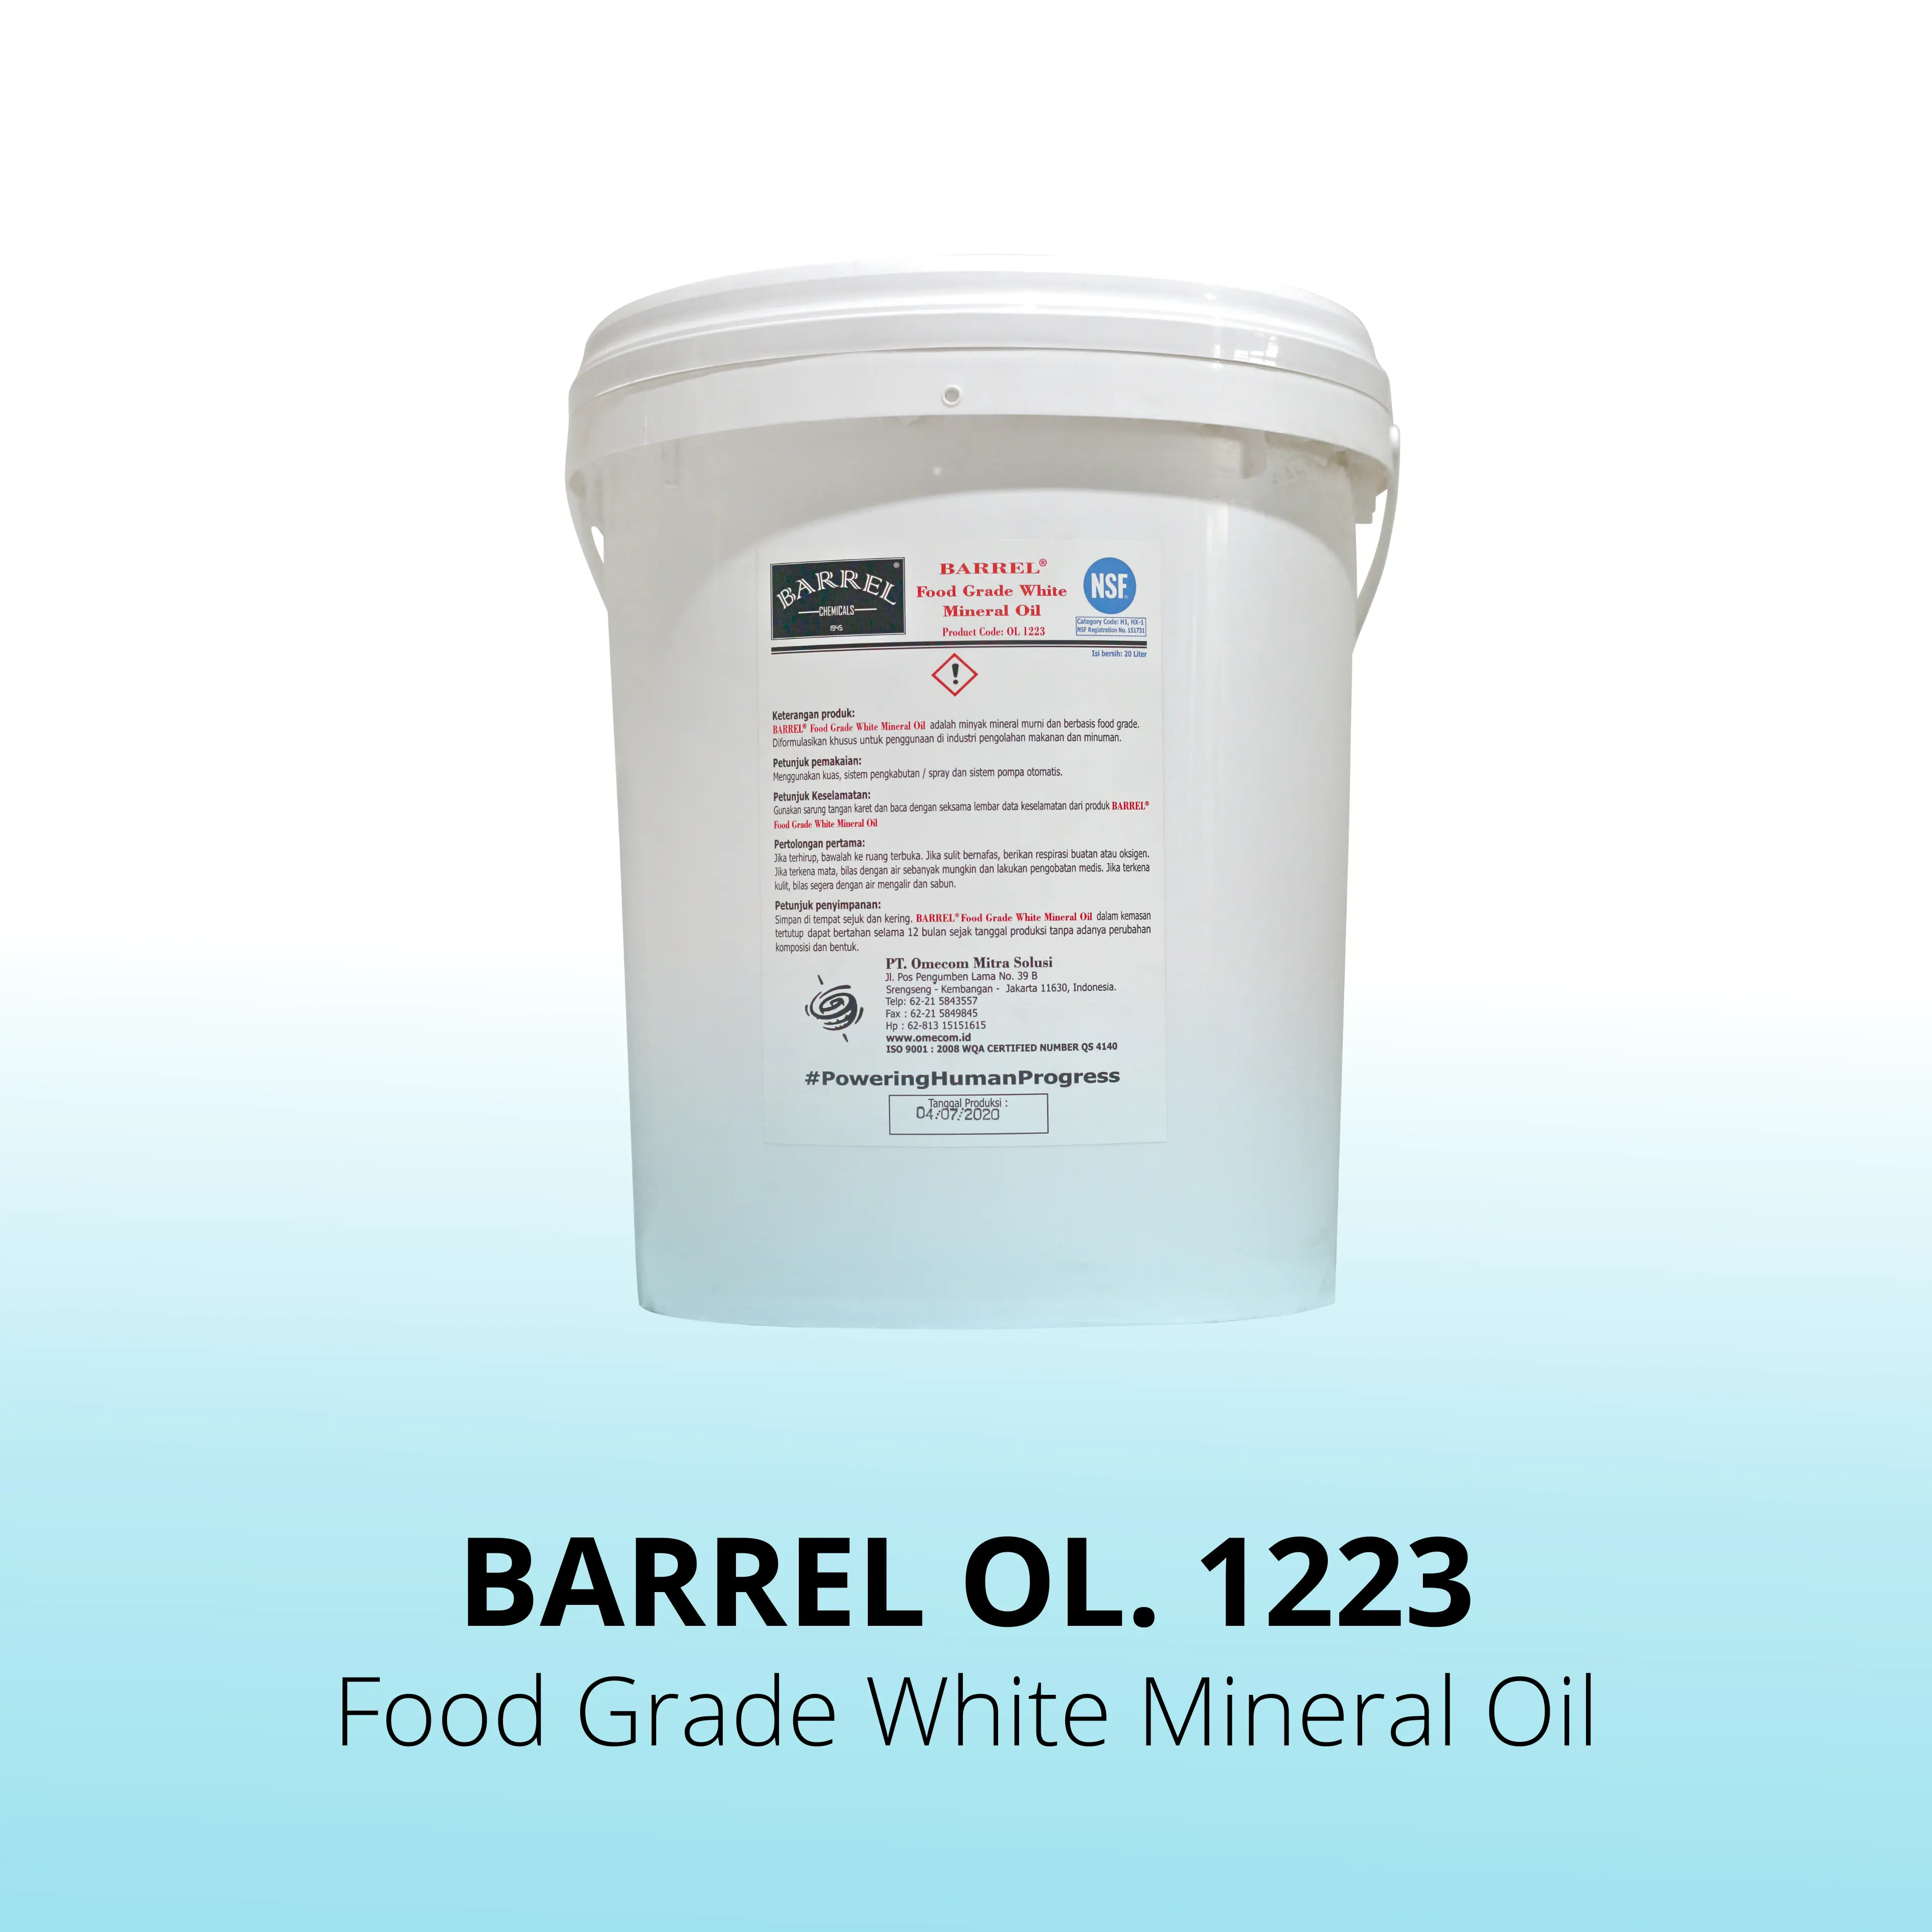 Barrel OL. 1223